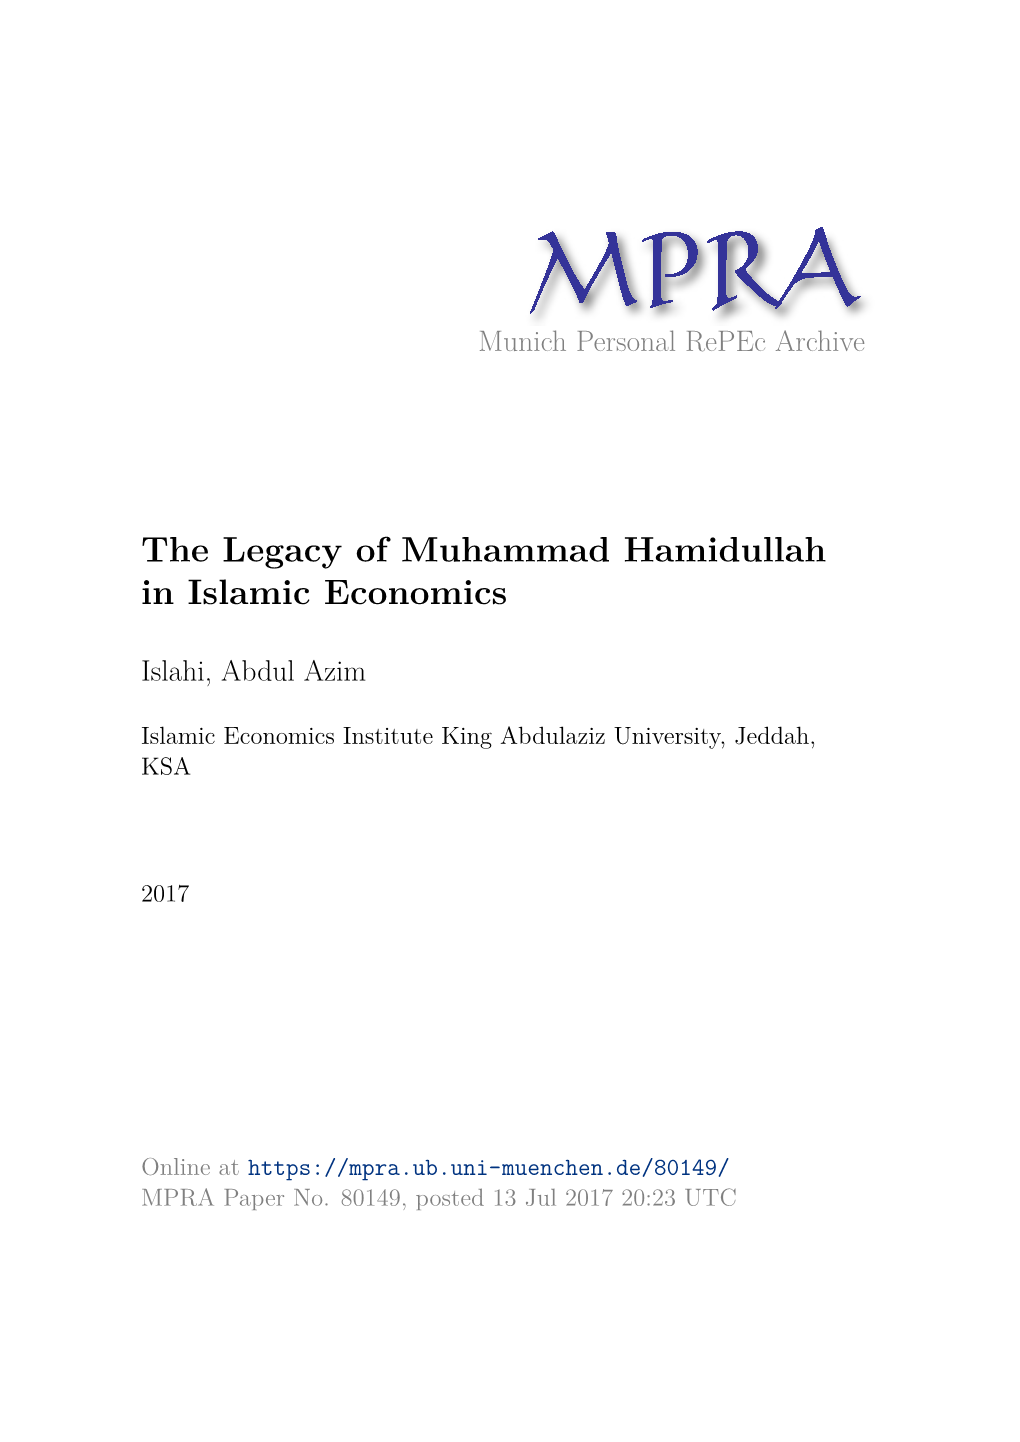 The Legacy of Muhammad Hamidullah in Islamic Economics